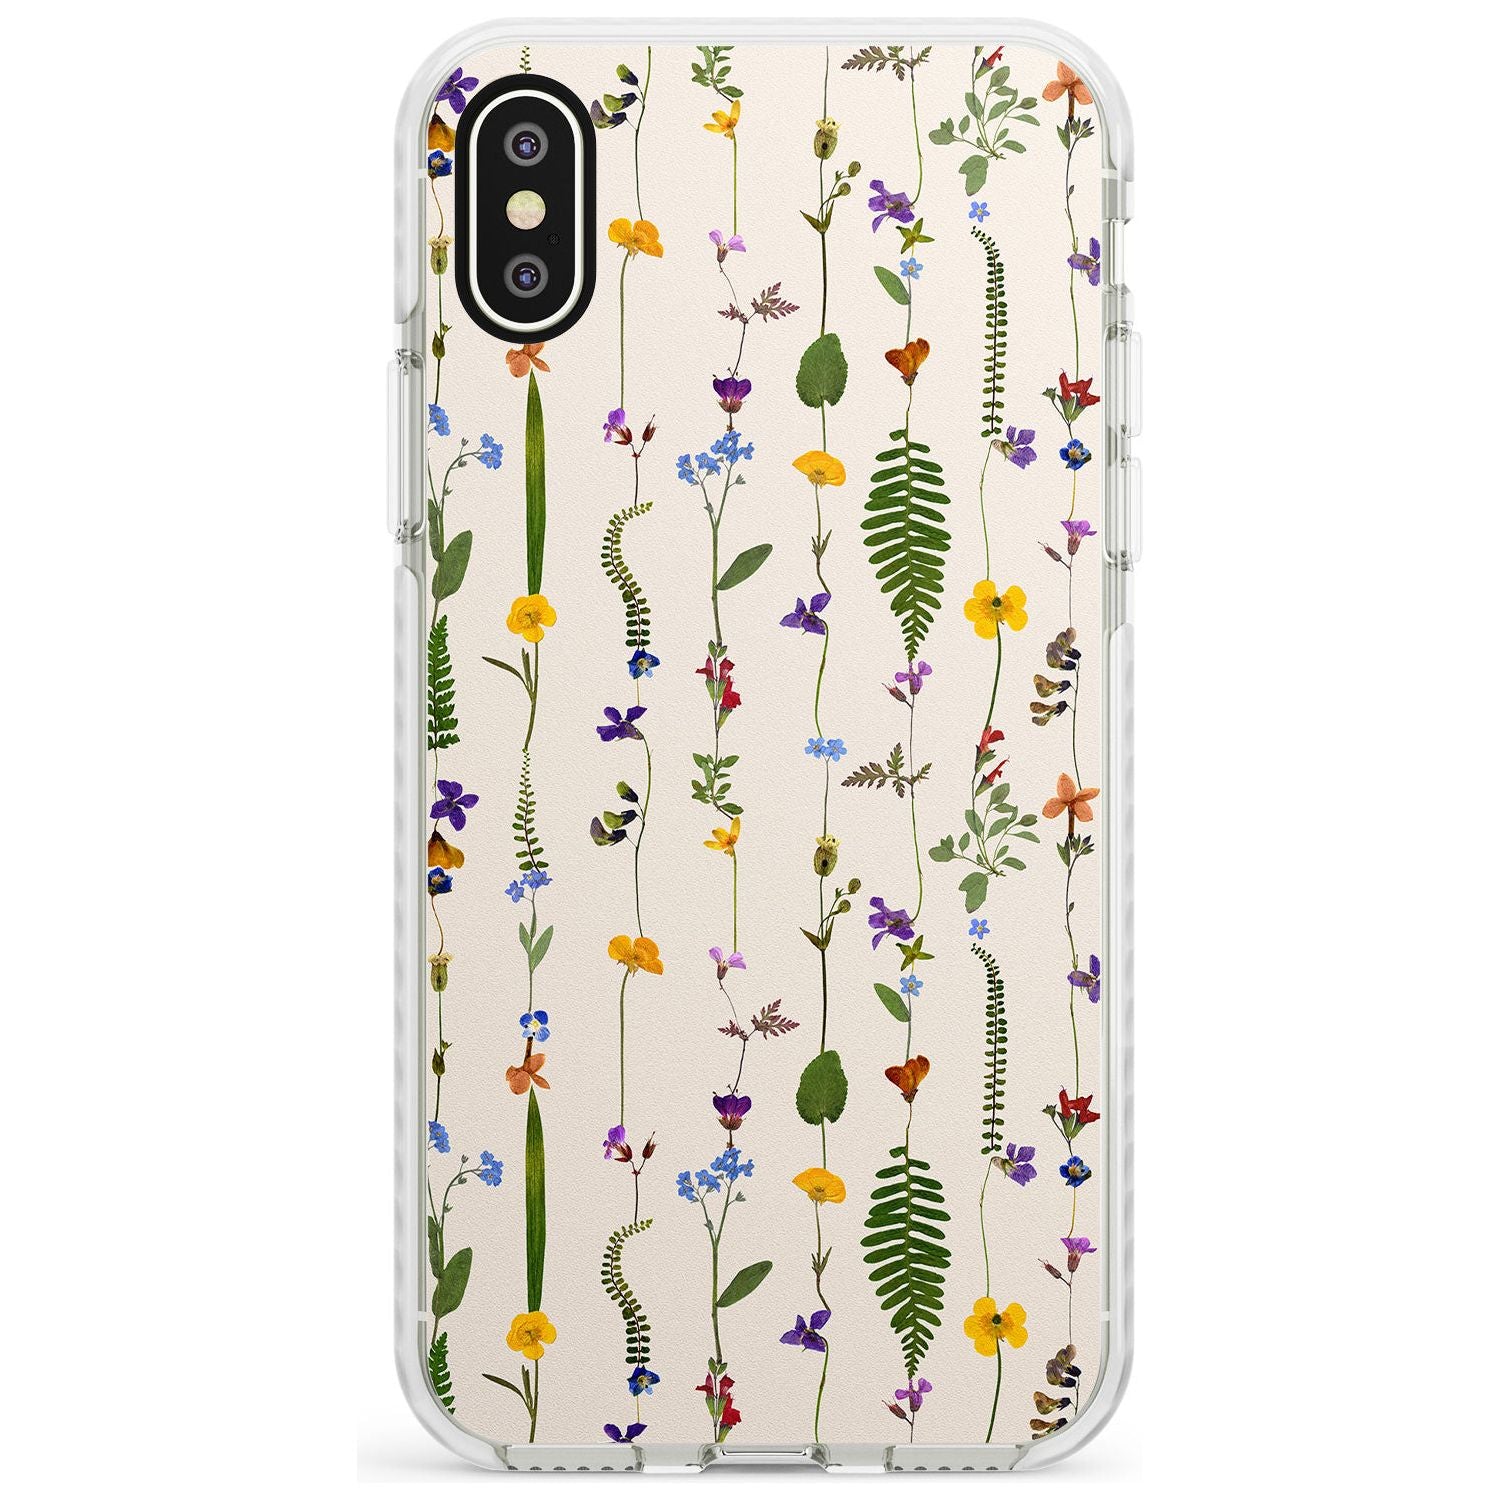 Wildflower Chain Design - Cream Impact Phone Case for iPhone X XS Max XR